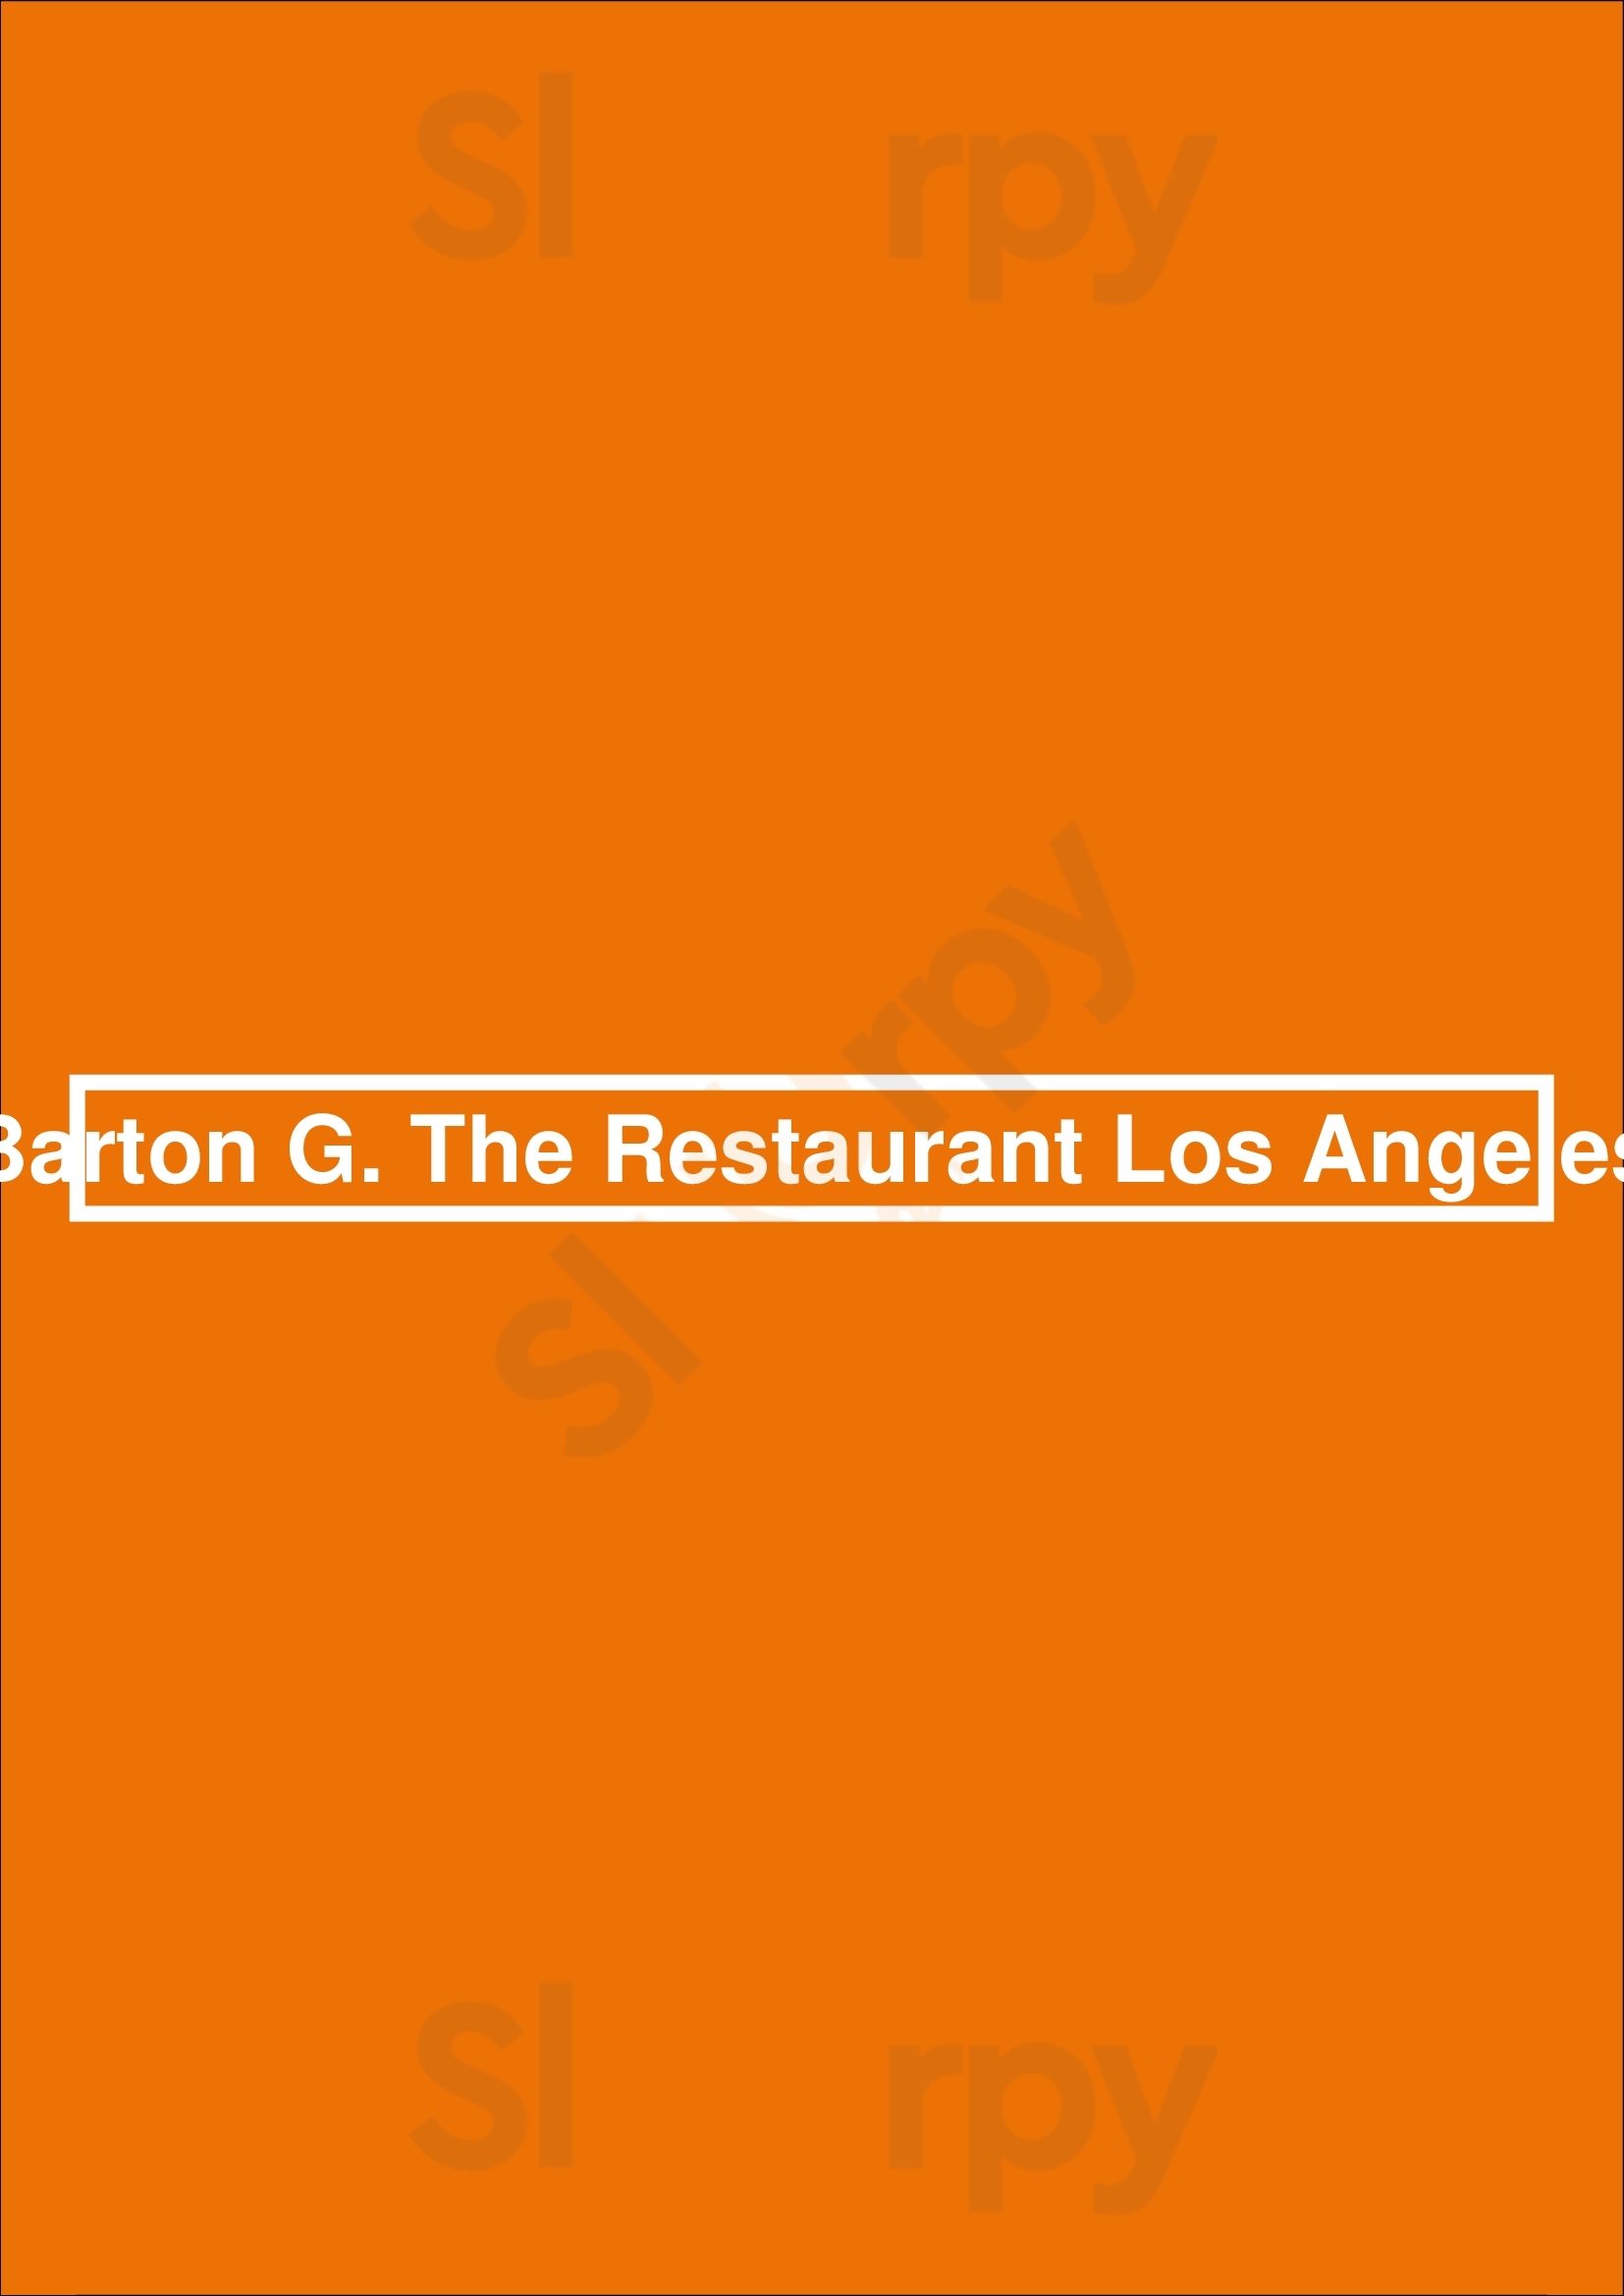 Barton G. The Restaurant Los Angeles Menu - 1